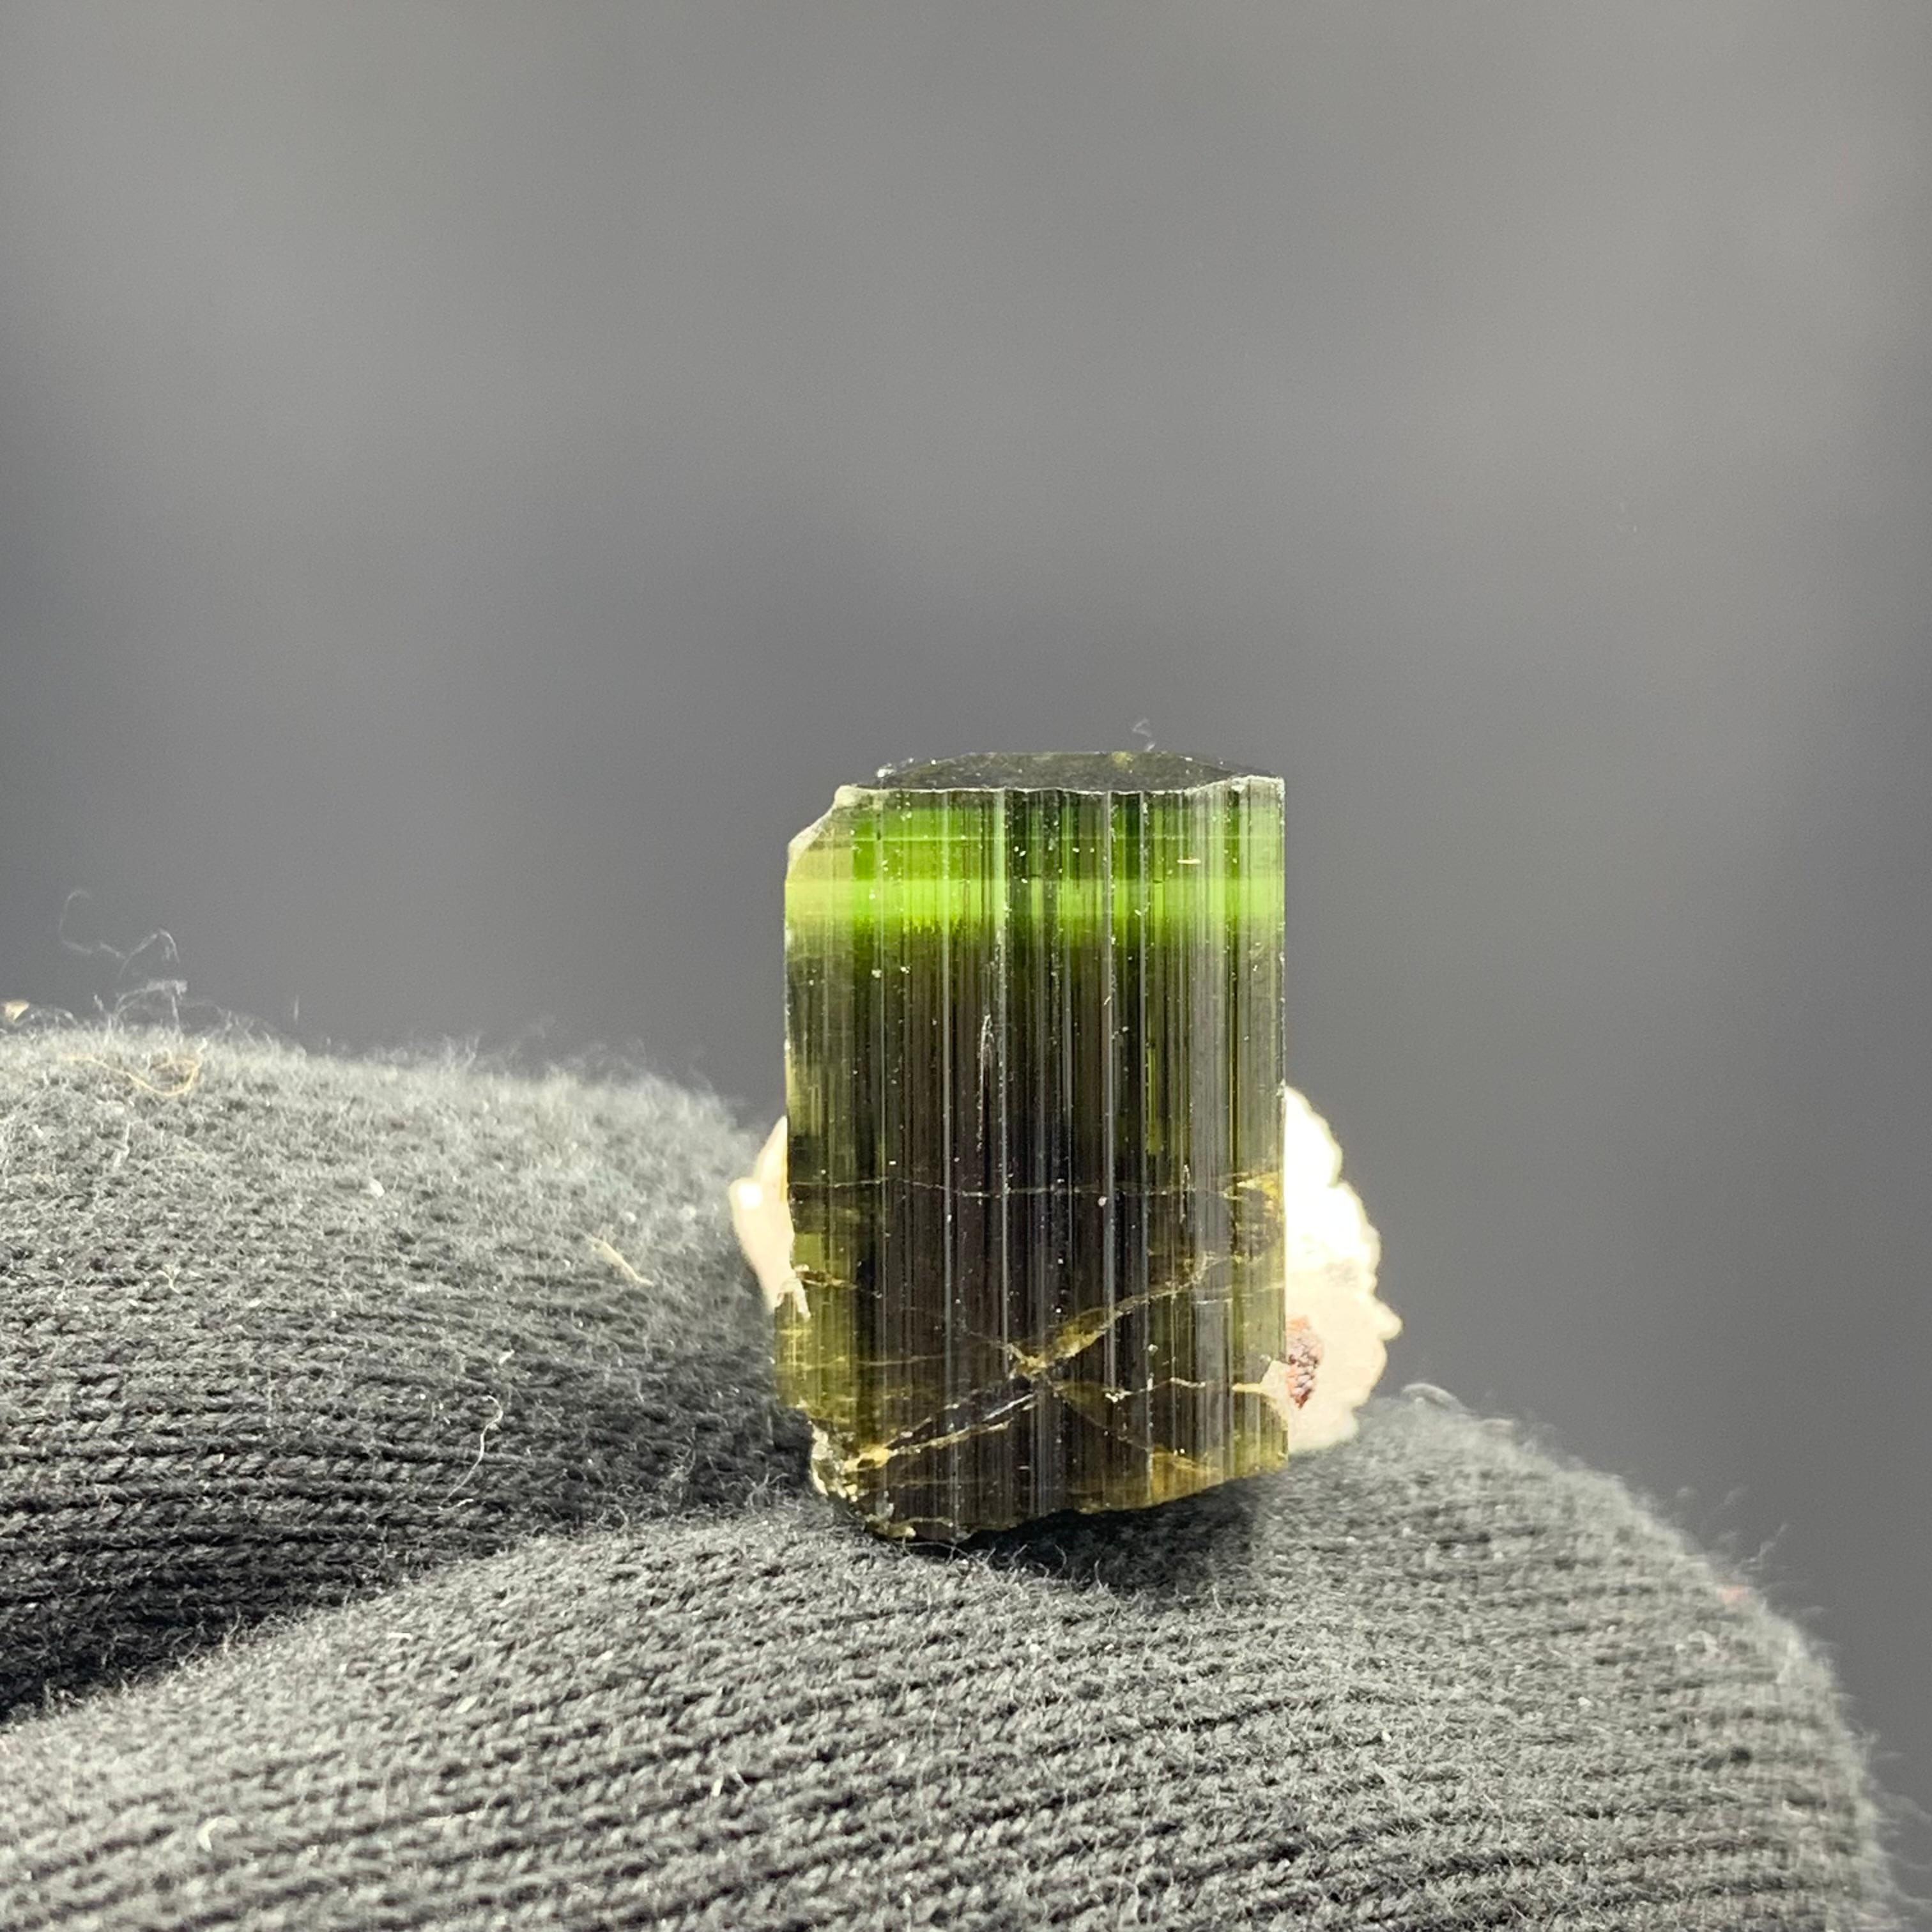 38.55 Carat Adorable Tourmaline Specimen With Albite From Skardu, Pakistan 

Weight: 38.55 Carat
Dimension: 1.9 x 1.6 x 2.1 Cm
Origin: Stak Nala, Skardu Valley, Pakistan 

Tourmaline is a crystalline silicate mineral group in which boron is